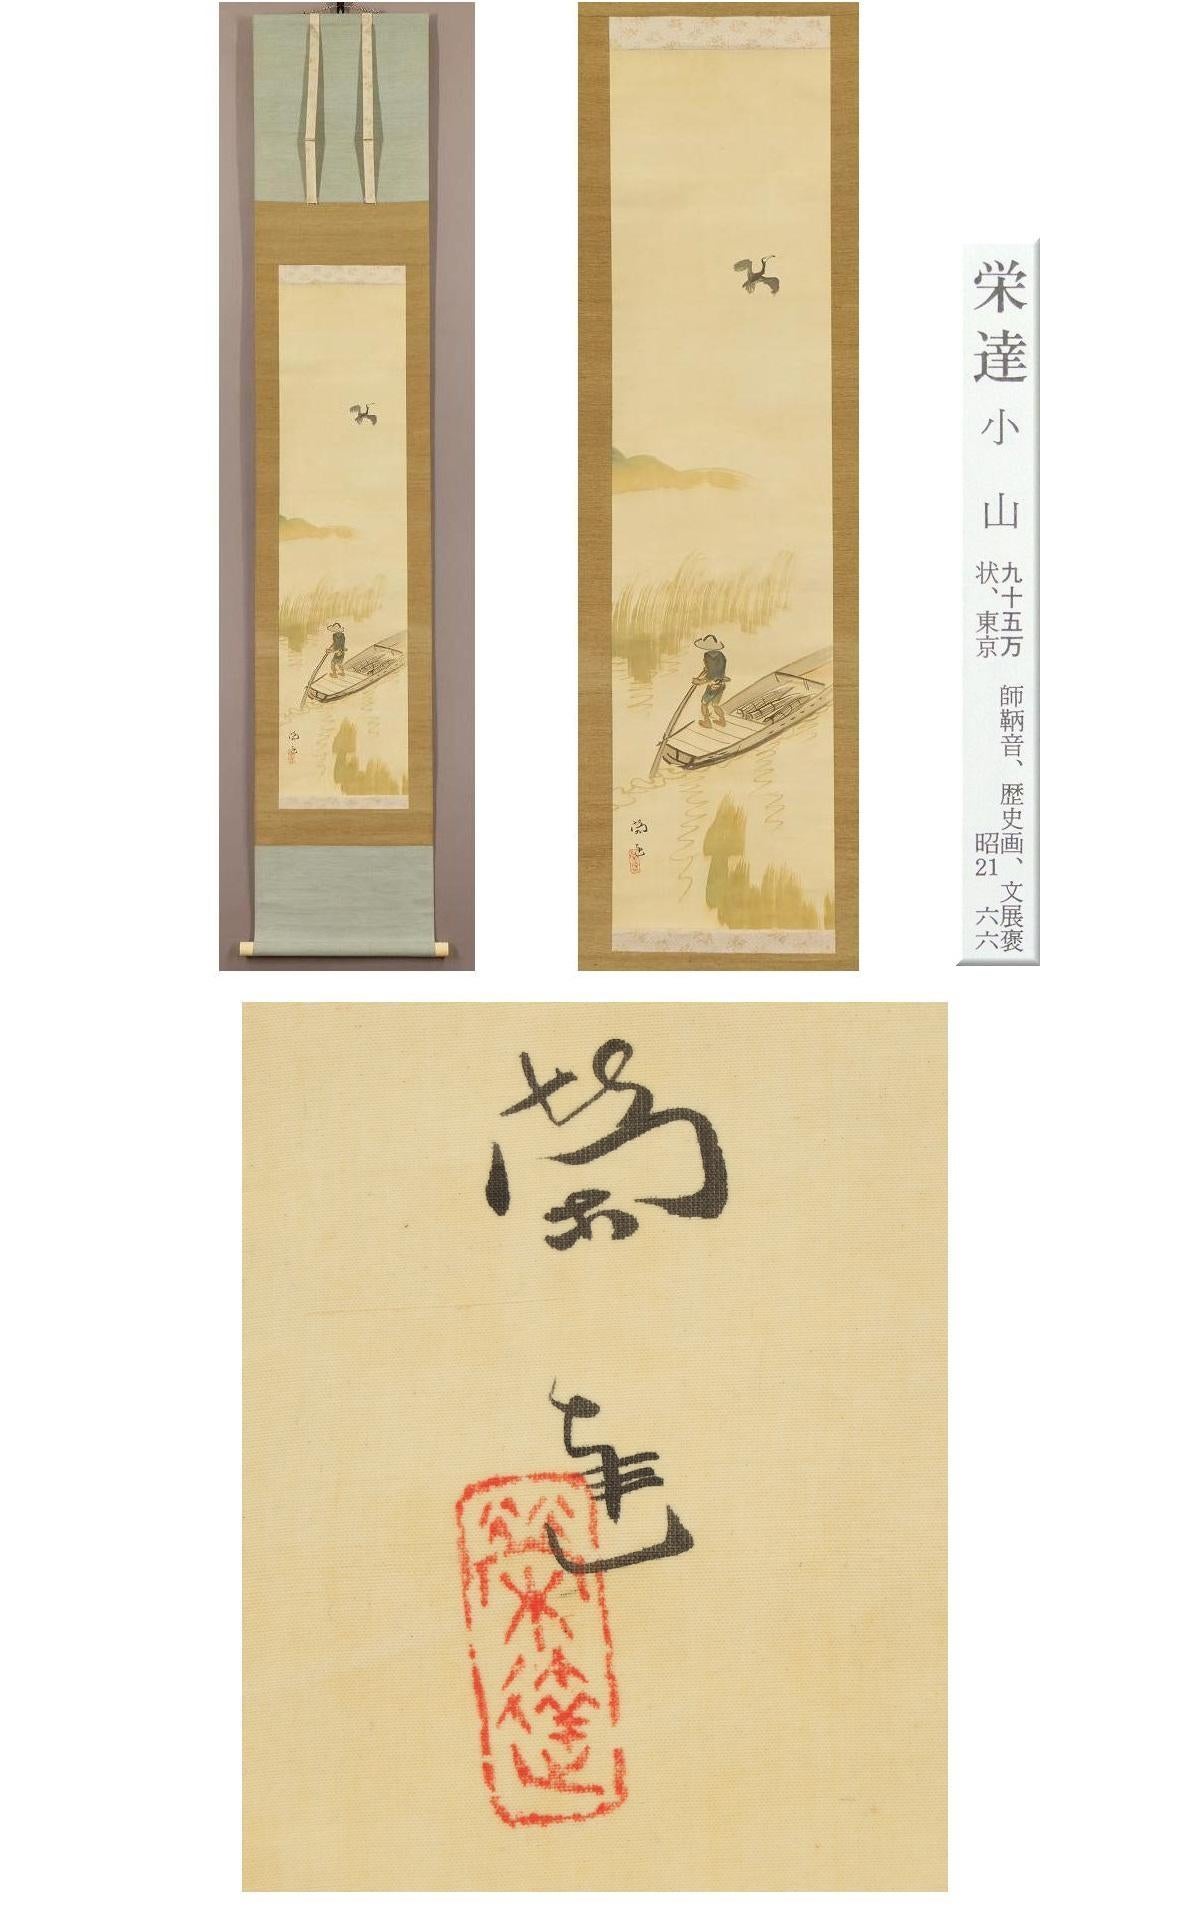 [Authentic work] ◆ Eitatsu Koyama ◆ Reed Cutter drawing ◆ Japanese painting ◆ Hand-painted ◆ Silk book ◆ Hanging scroll ◆ 

Eitatsu Koyama
1880 (Meiji 13) - 1945 (Showa 20)
[Art yearbook appraised value 950,000 yen ]
[Birthplace/Teacher